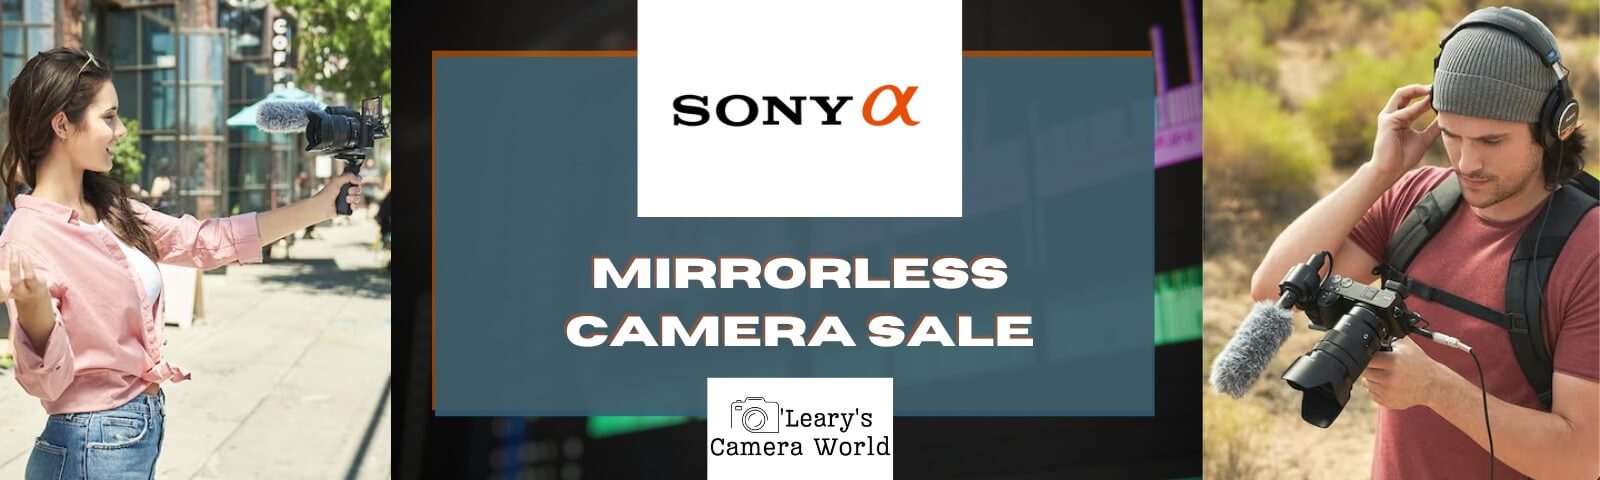 Sony Mirrorless Camera Sale